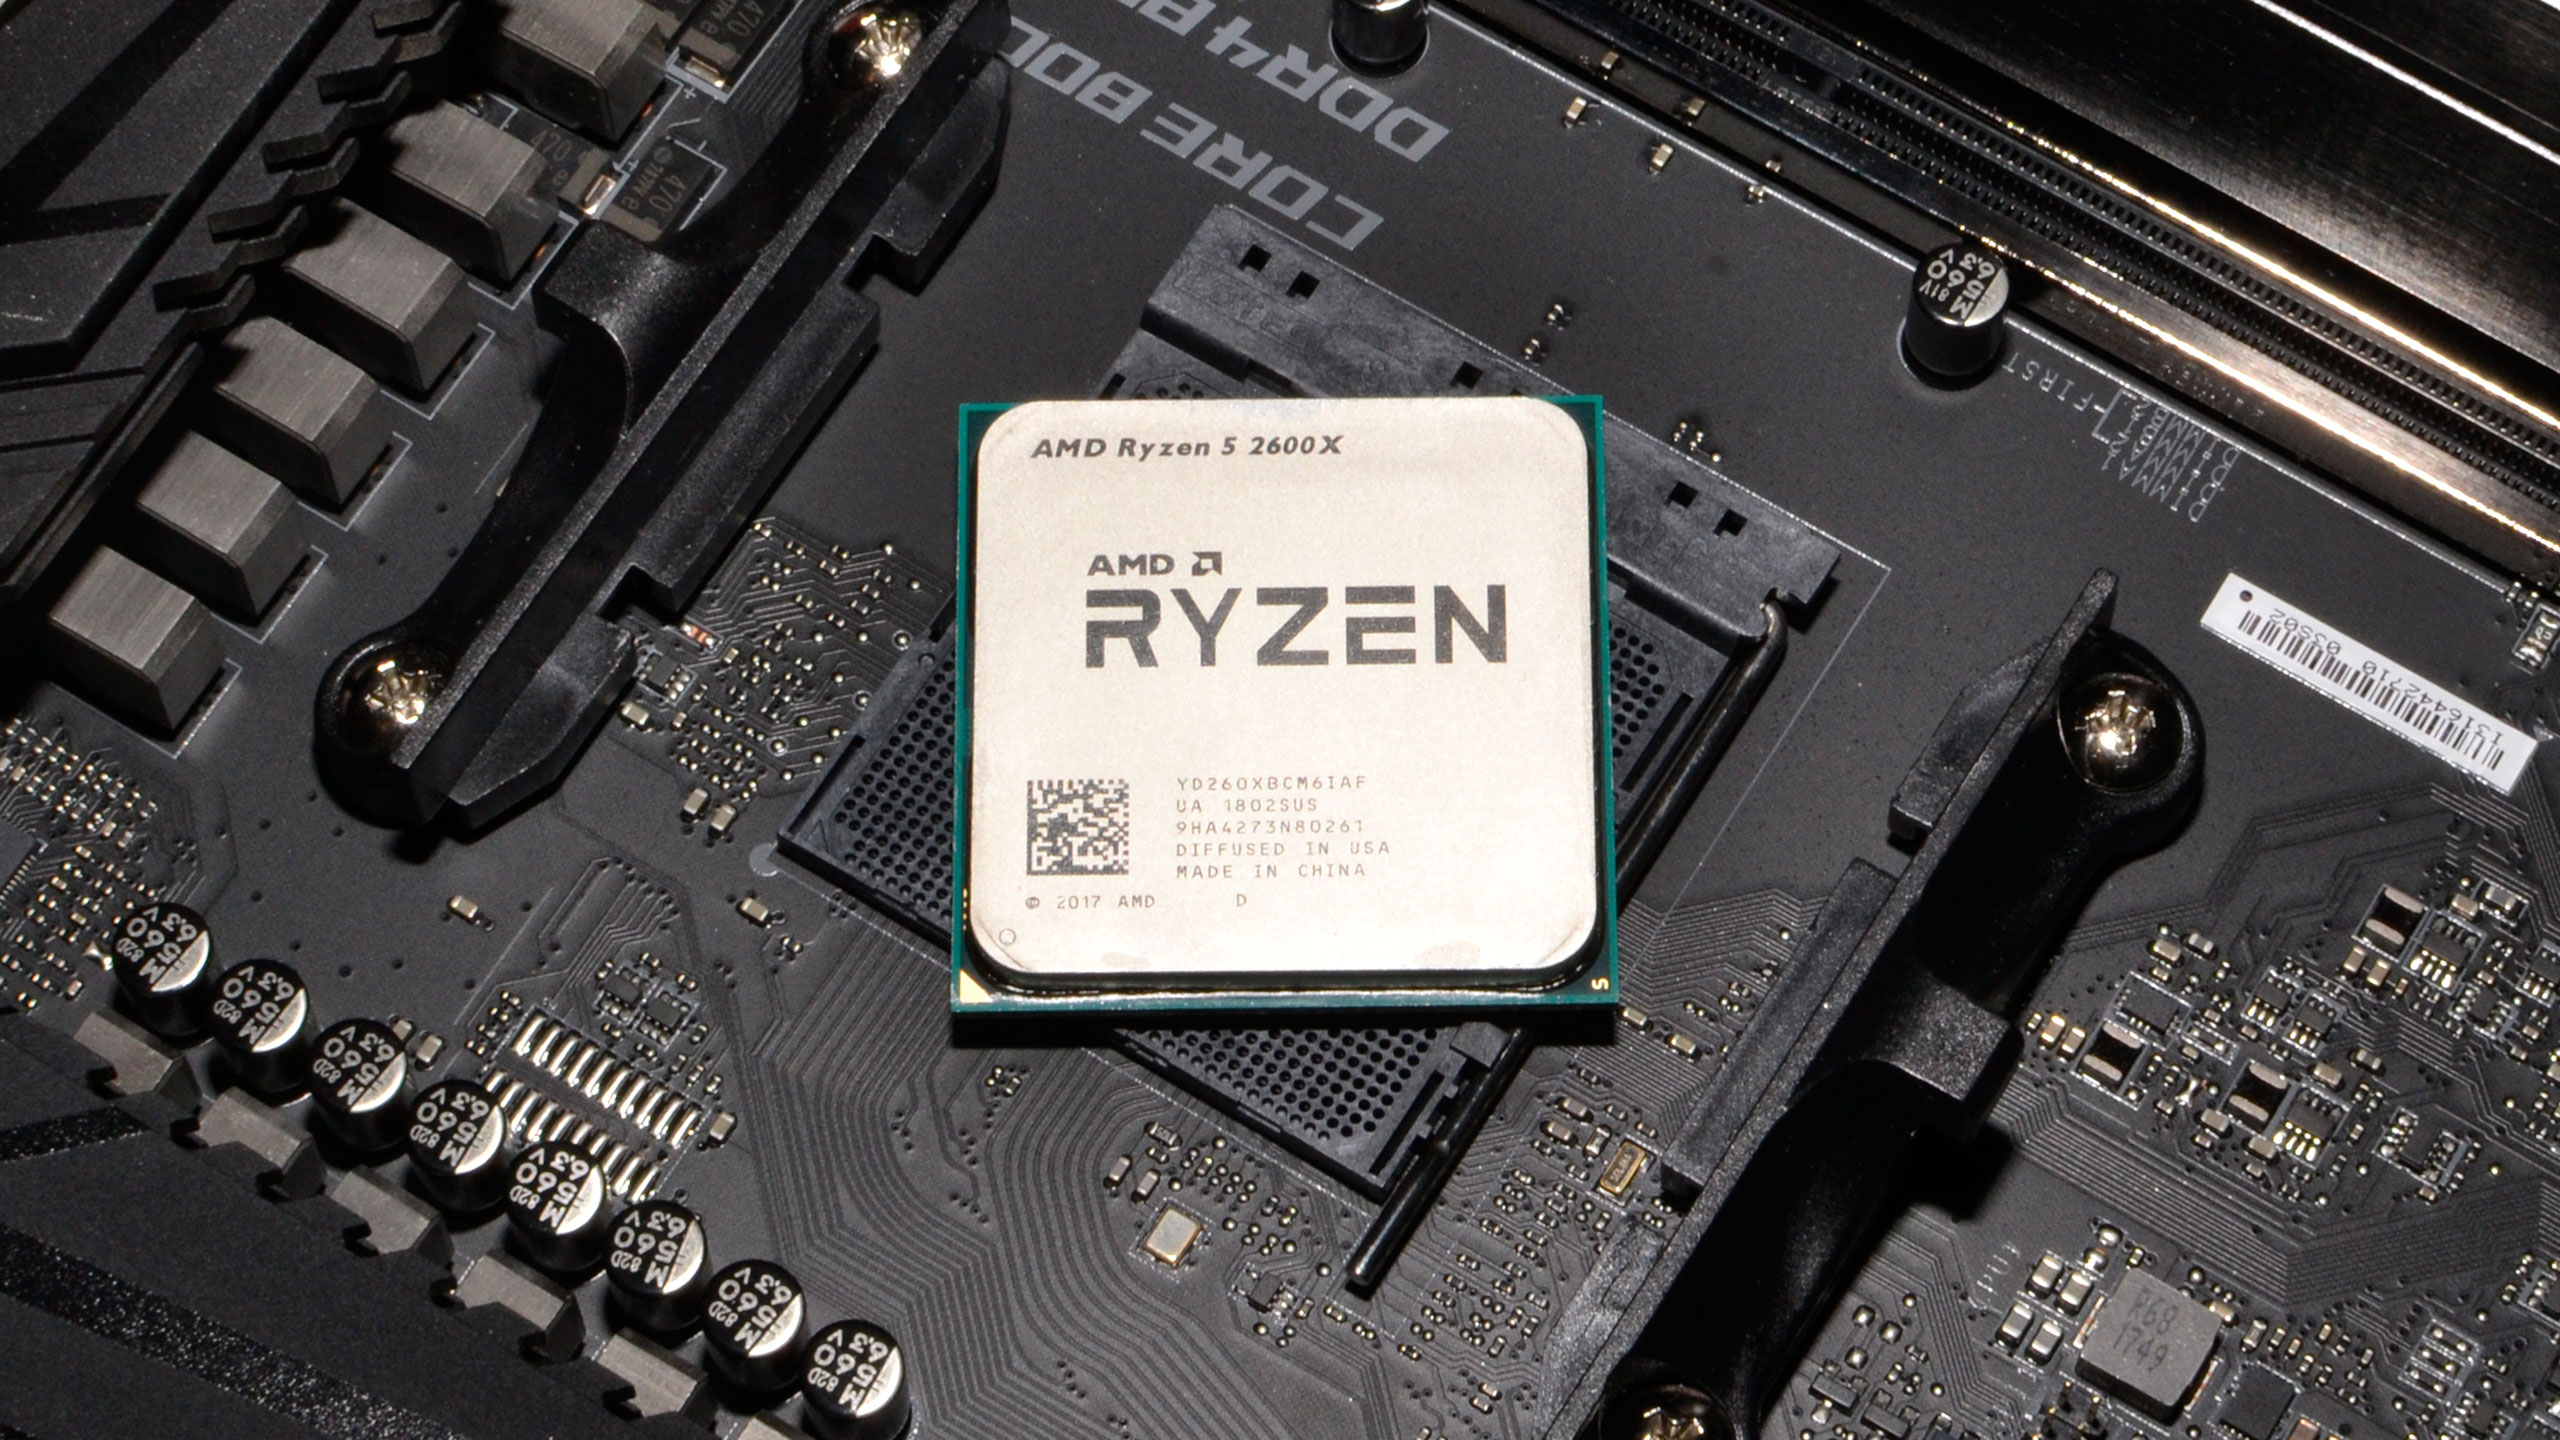 Сборка на 5 5600. Ryzen 2600x. AMD Ryzen 5 2600x. AMD 5 2600. Процессор AMD Ryzen 5 2600 am4.